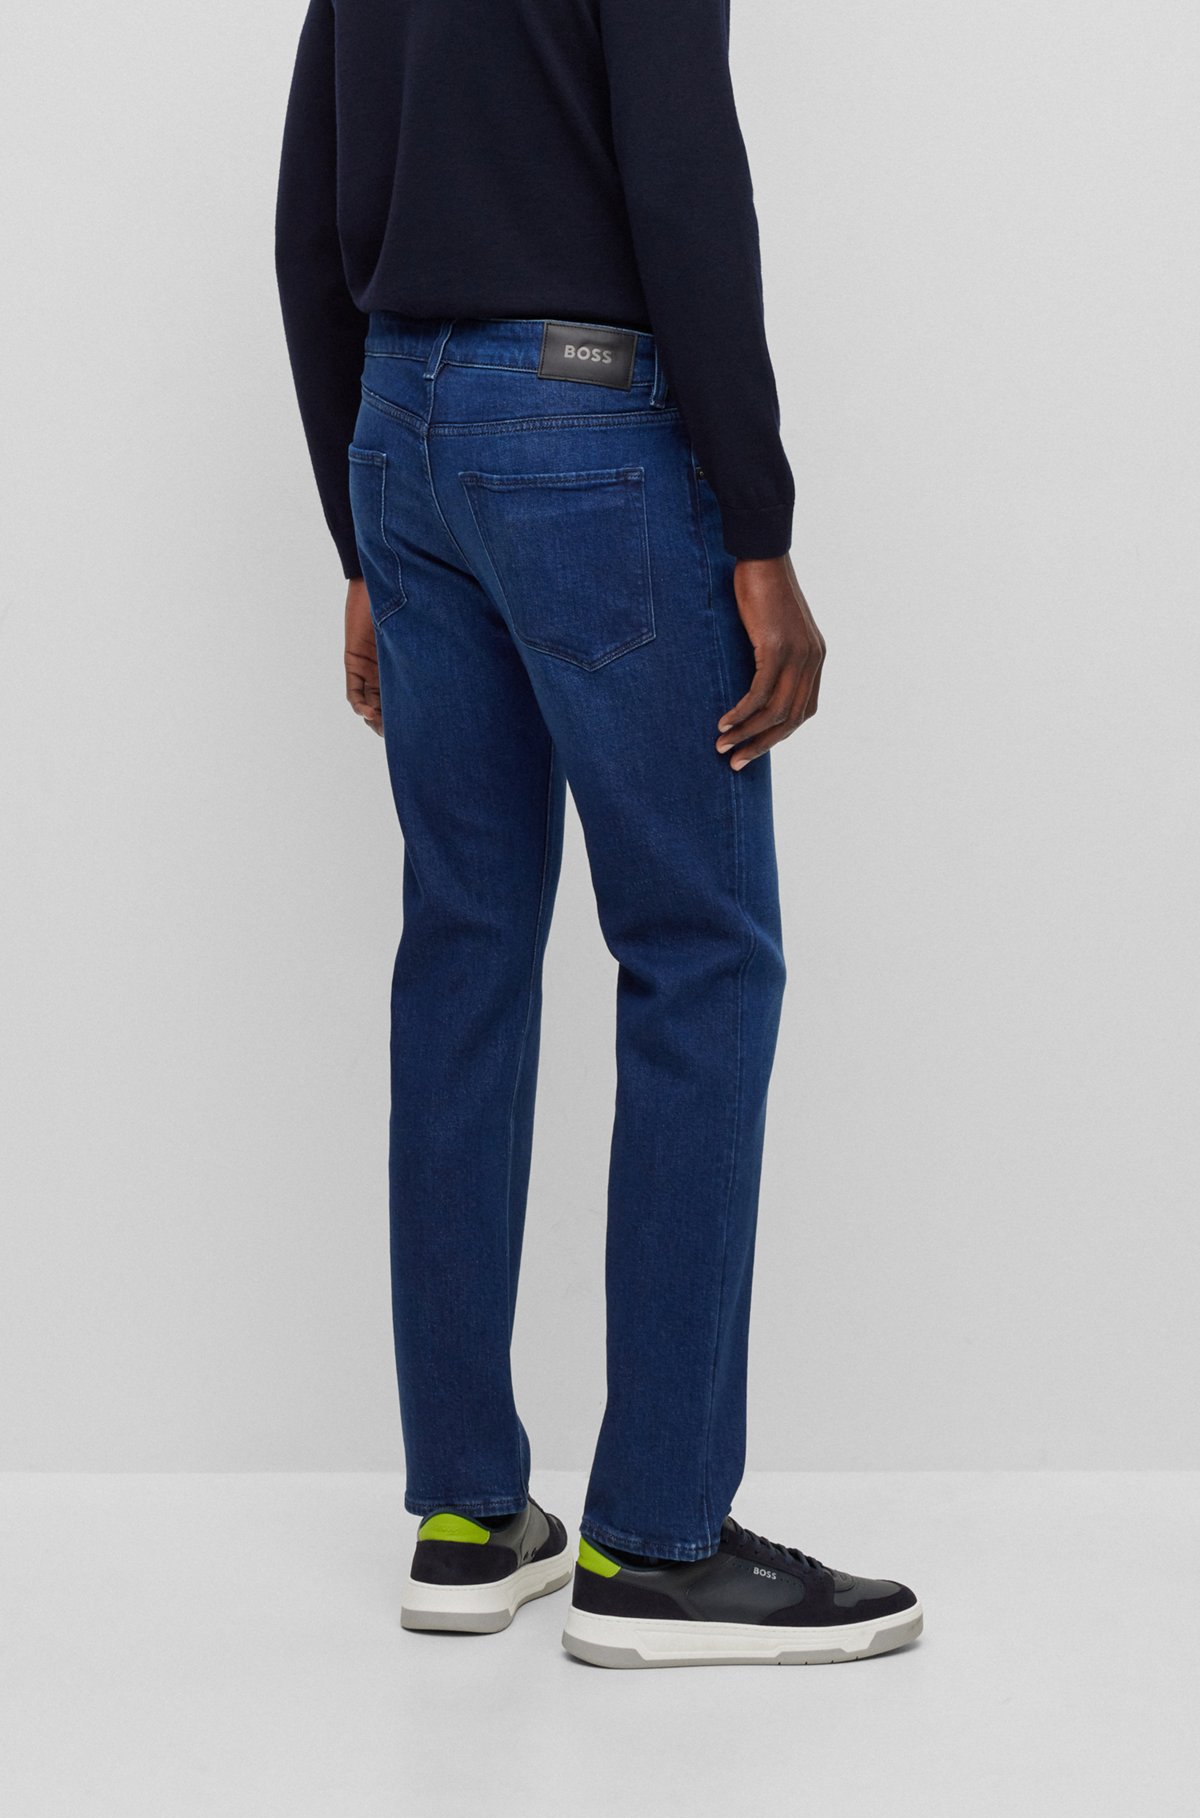 BOSS - Dunkelblaue Regular-Fit Jeans aus bequemem Stretch-Denim